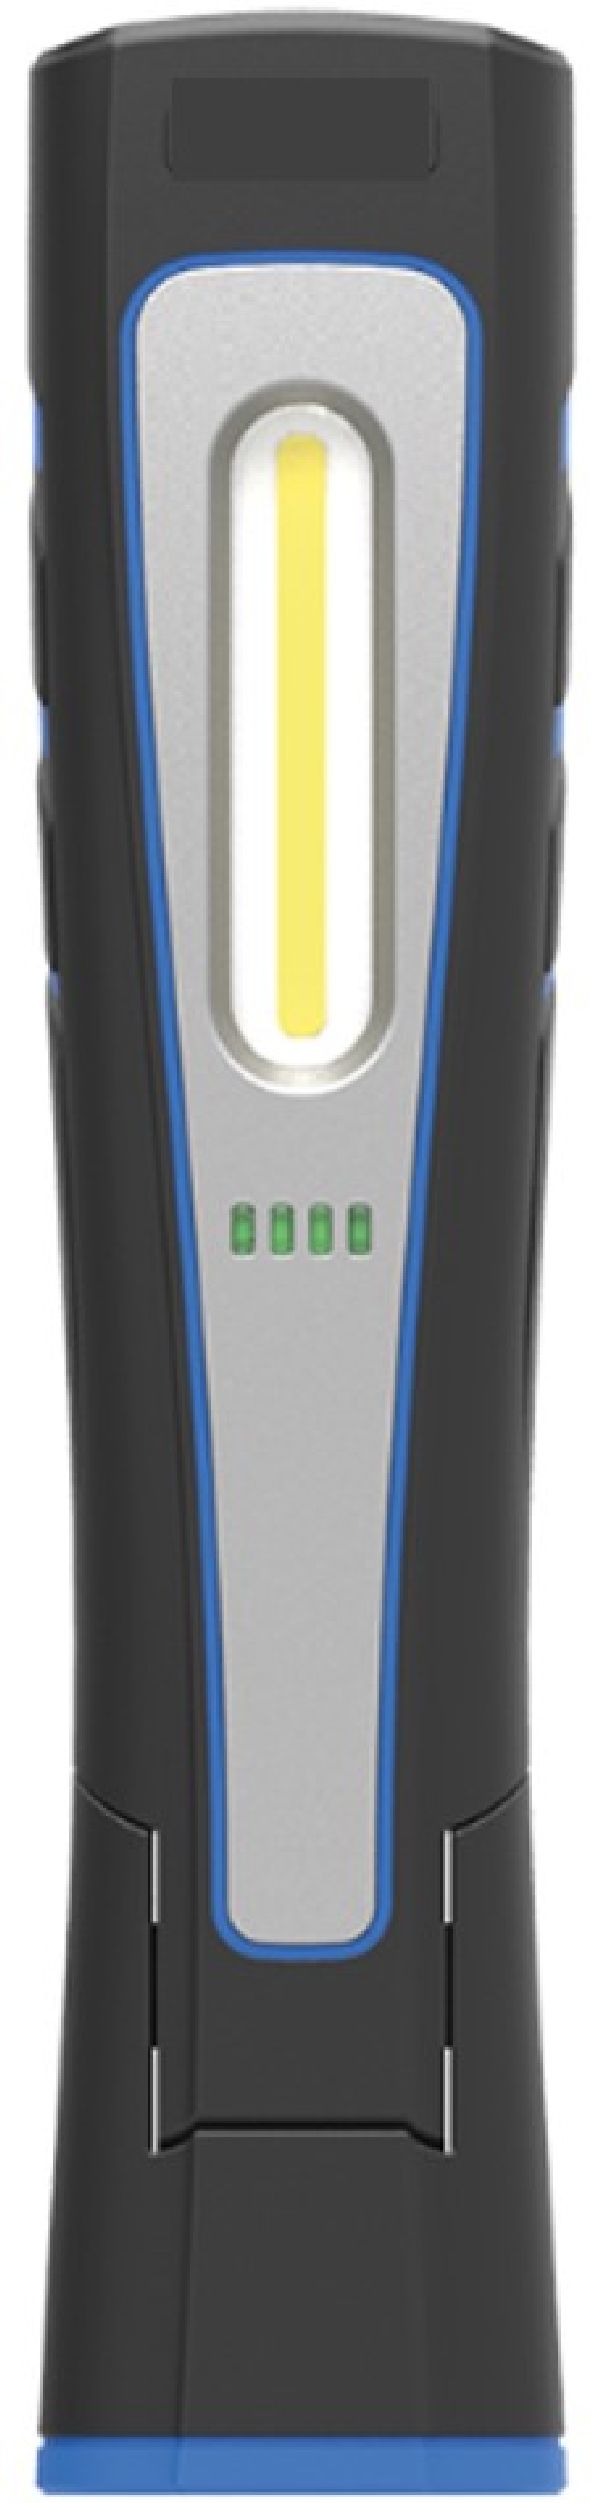 COB-LED Handlampe MAXI mit kabellosem Induktiv Ladesystem